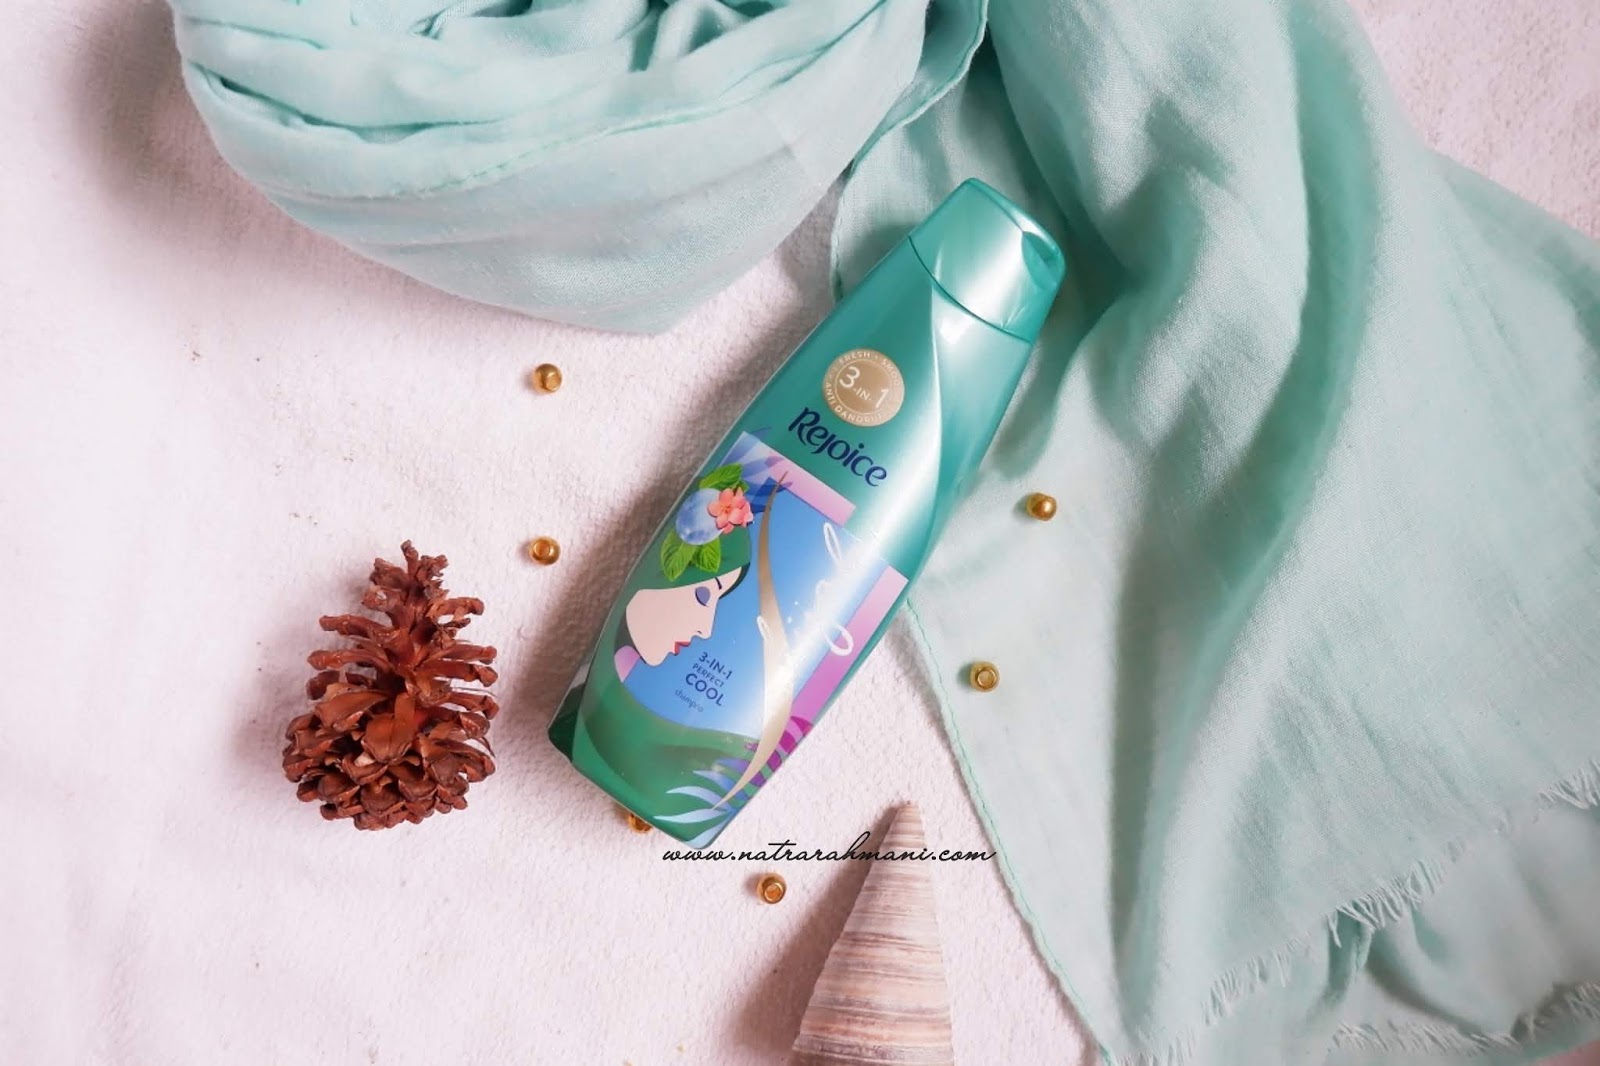 review-rejoice-perfect-cool-shampoo-natrarahmani